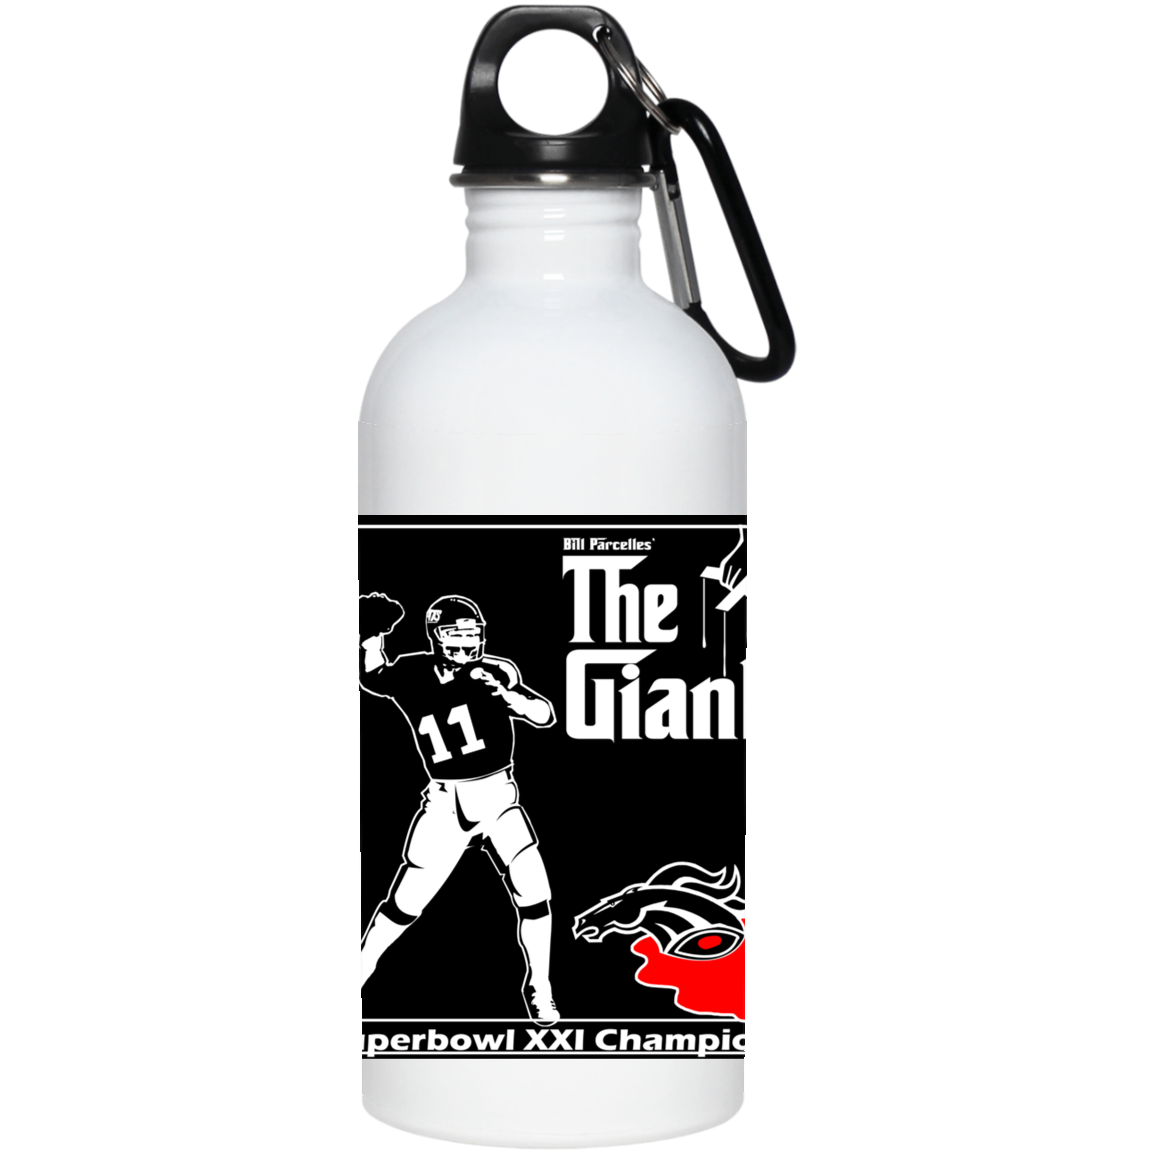 ArtichokeUSA Custom Design. Godfather Simms. NY Giants Superbowl XXI Champions. Fan Art. 20 oz. Stainless Steel Water Bottle